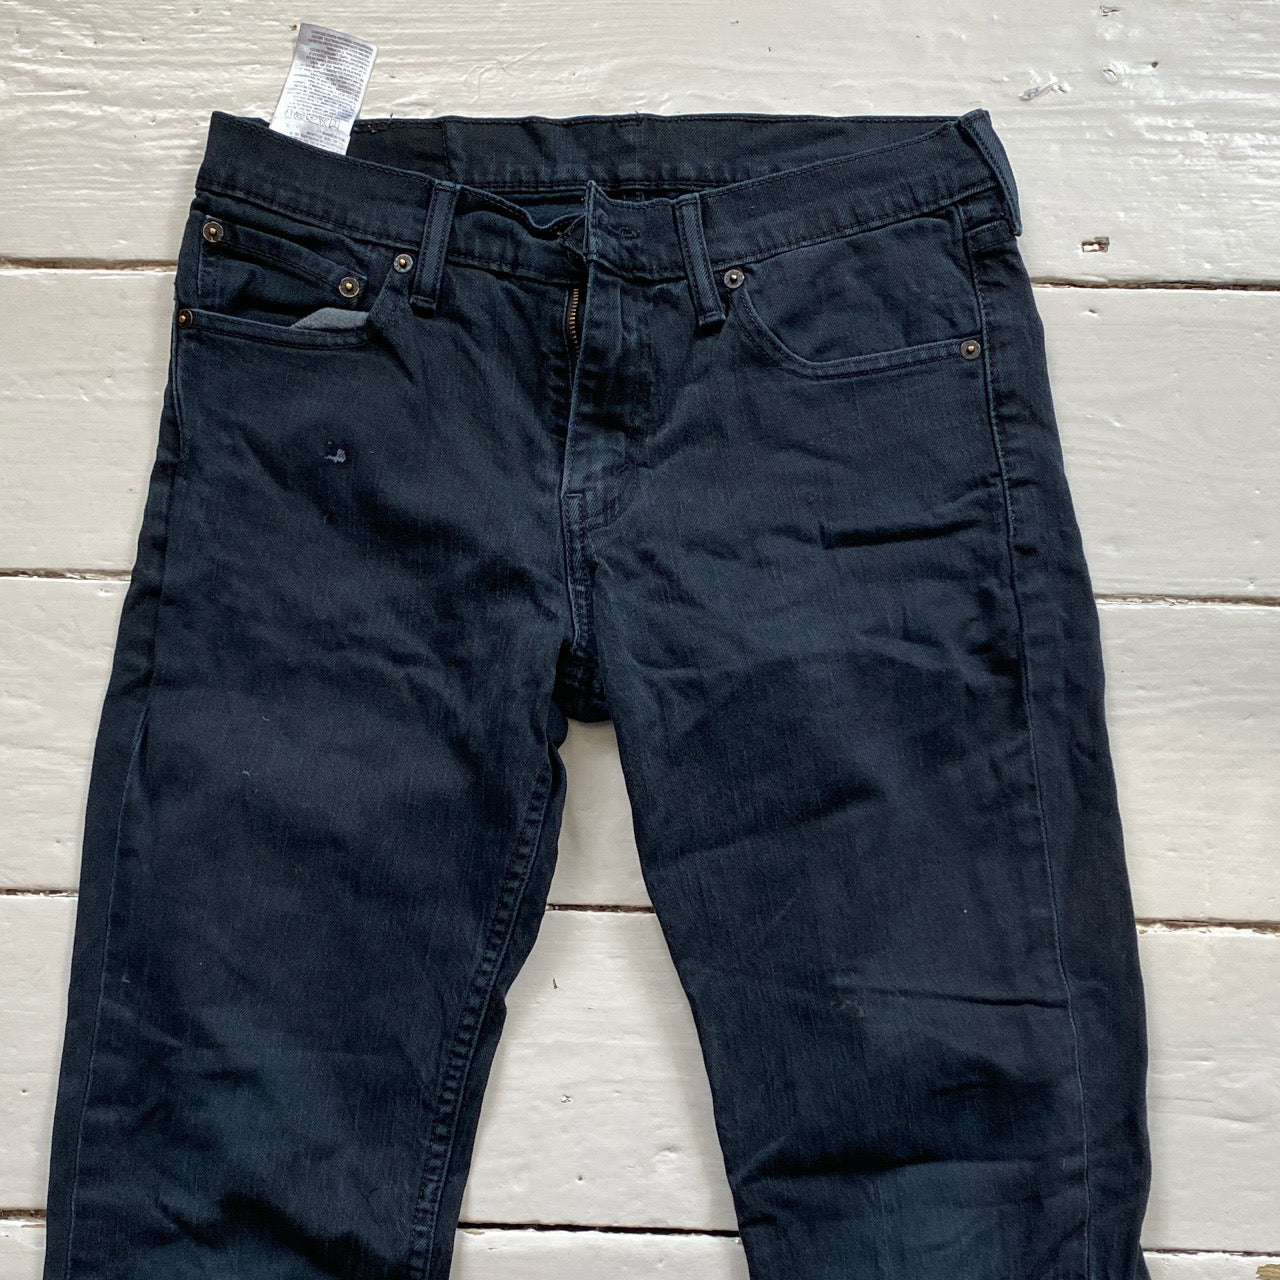 Levis 511 Slim Black Jeans (30/31)